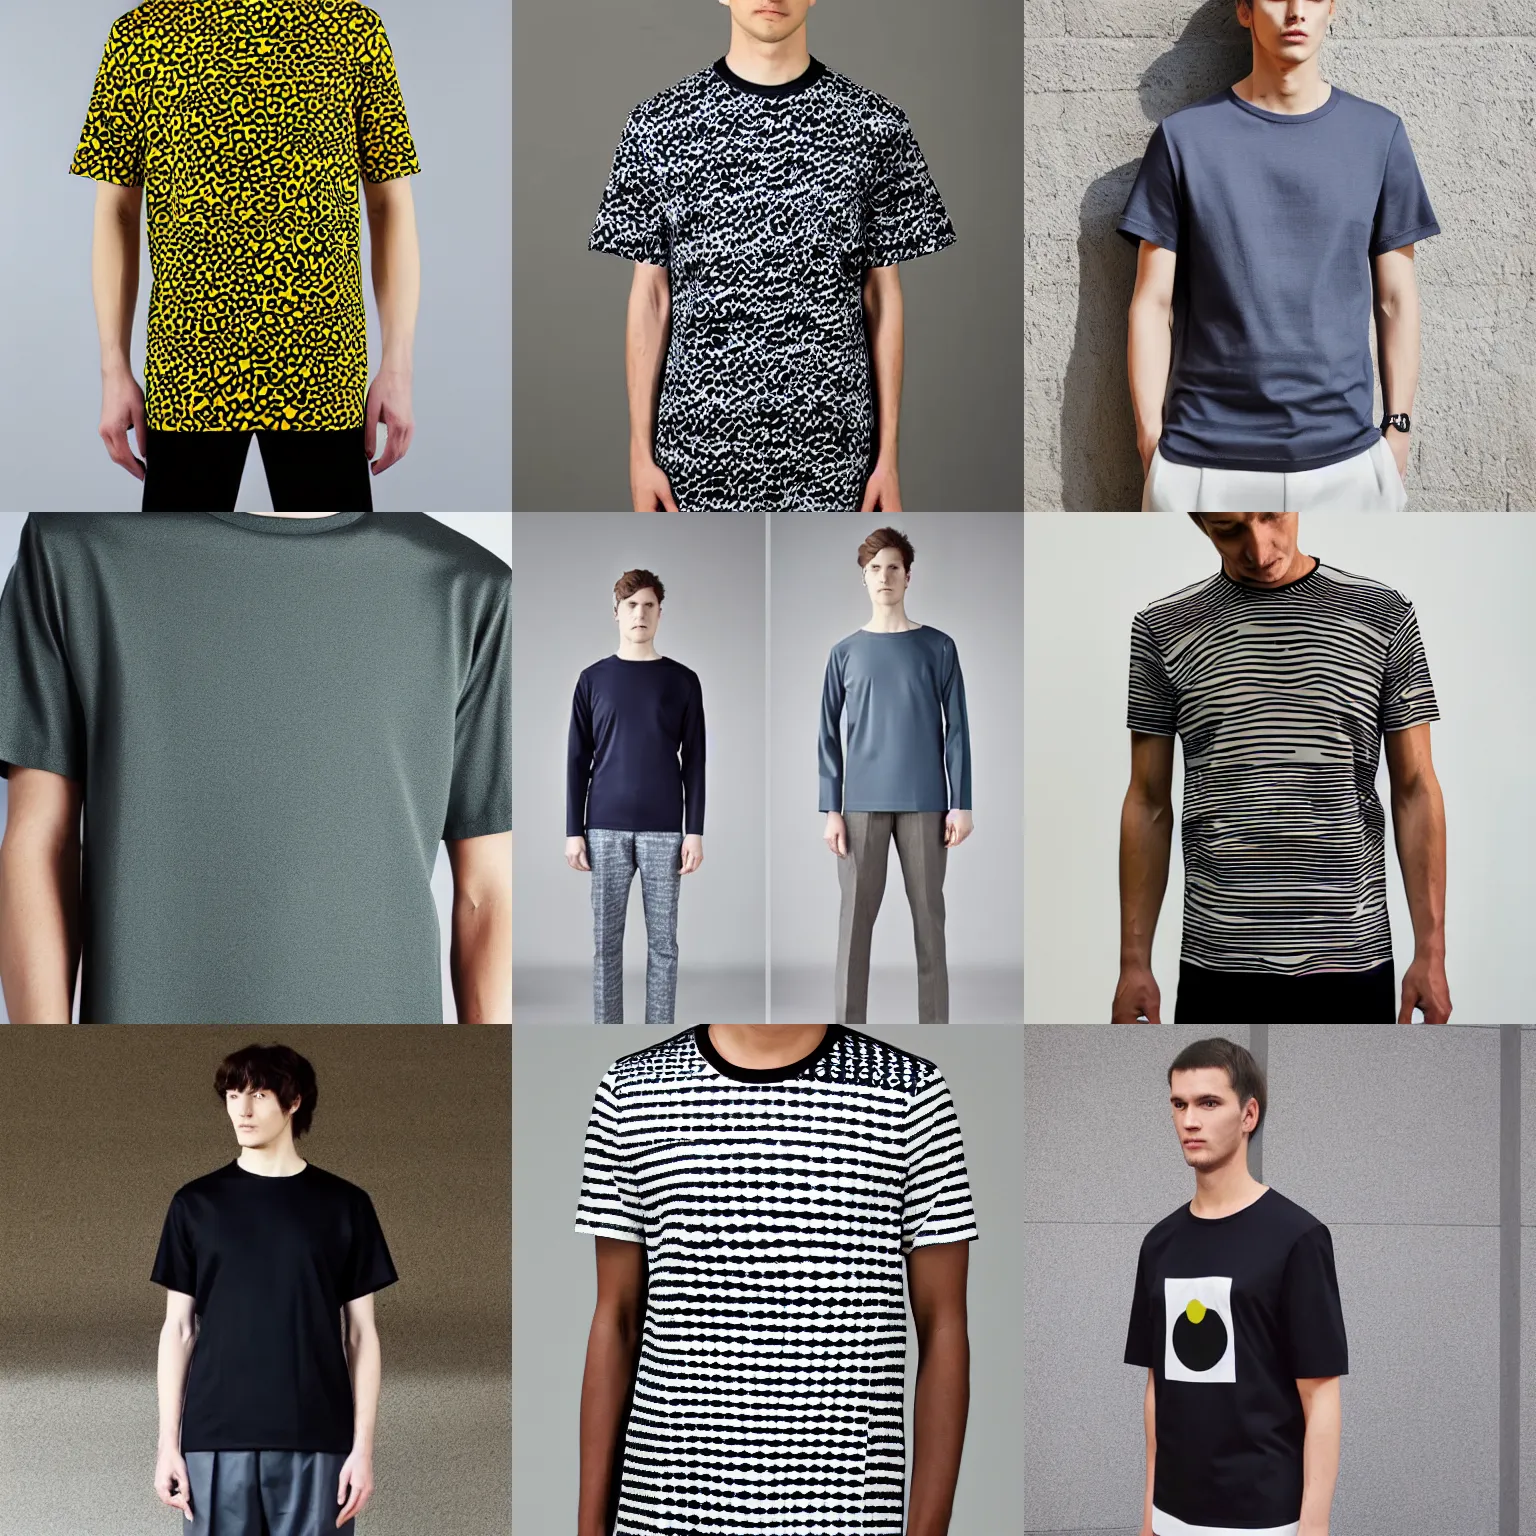 Prompt: marimekko Tsutsugaki men's t-shirt minimalist minimal design